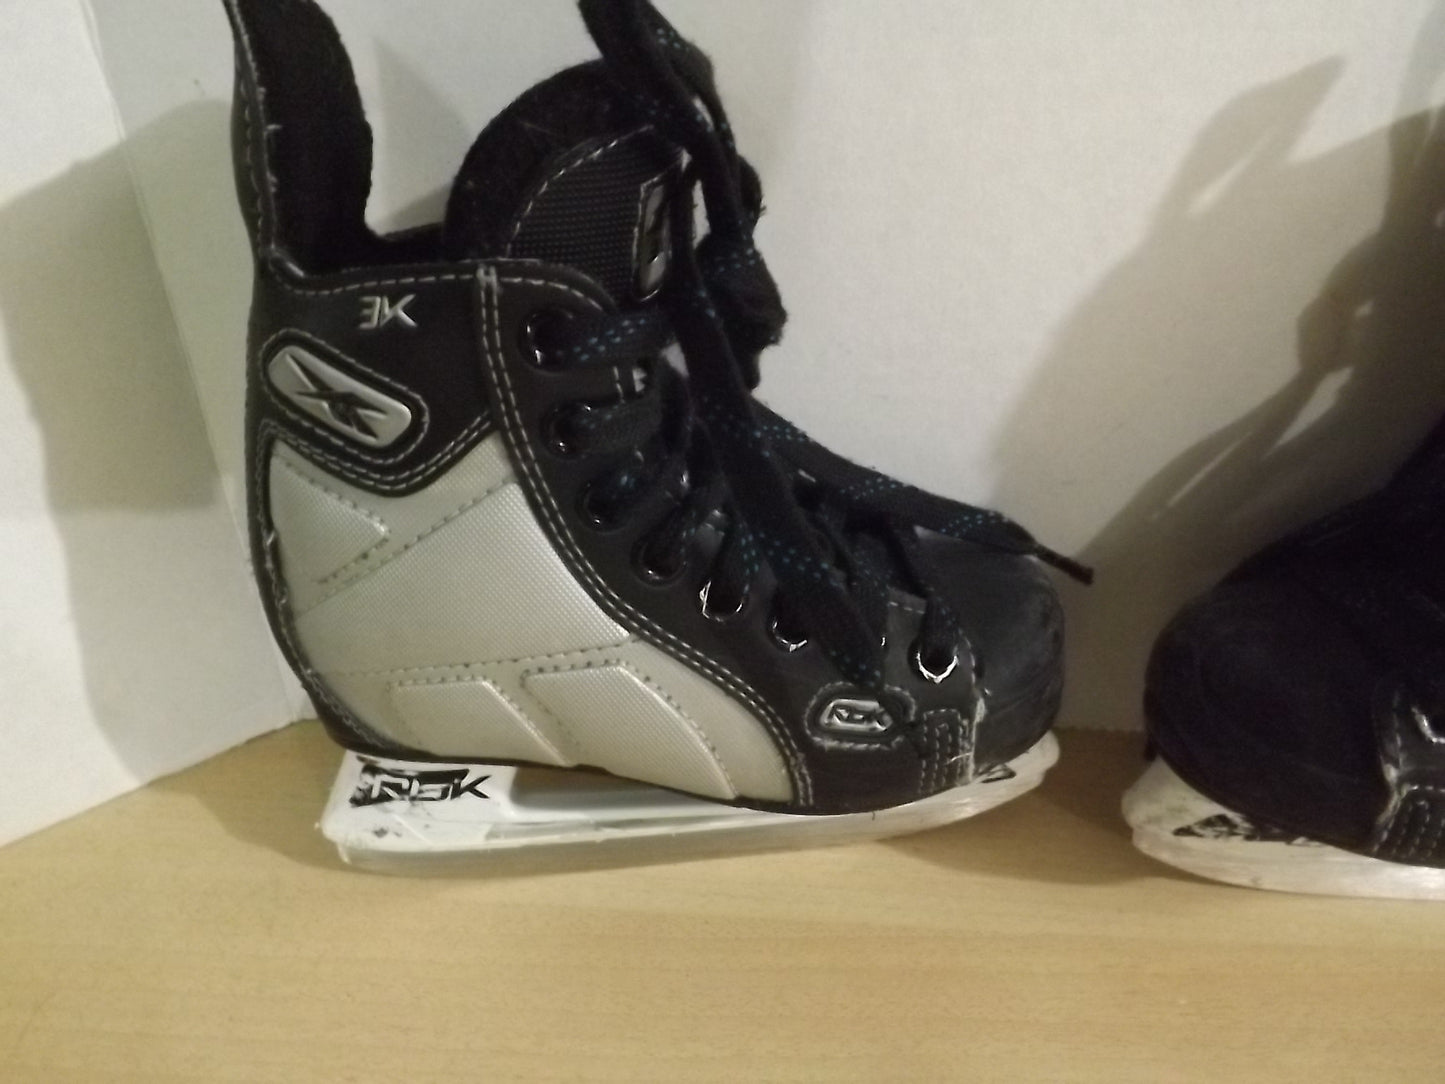 Hockey Skates Child Size 12 Shoe Size RBK Reebok